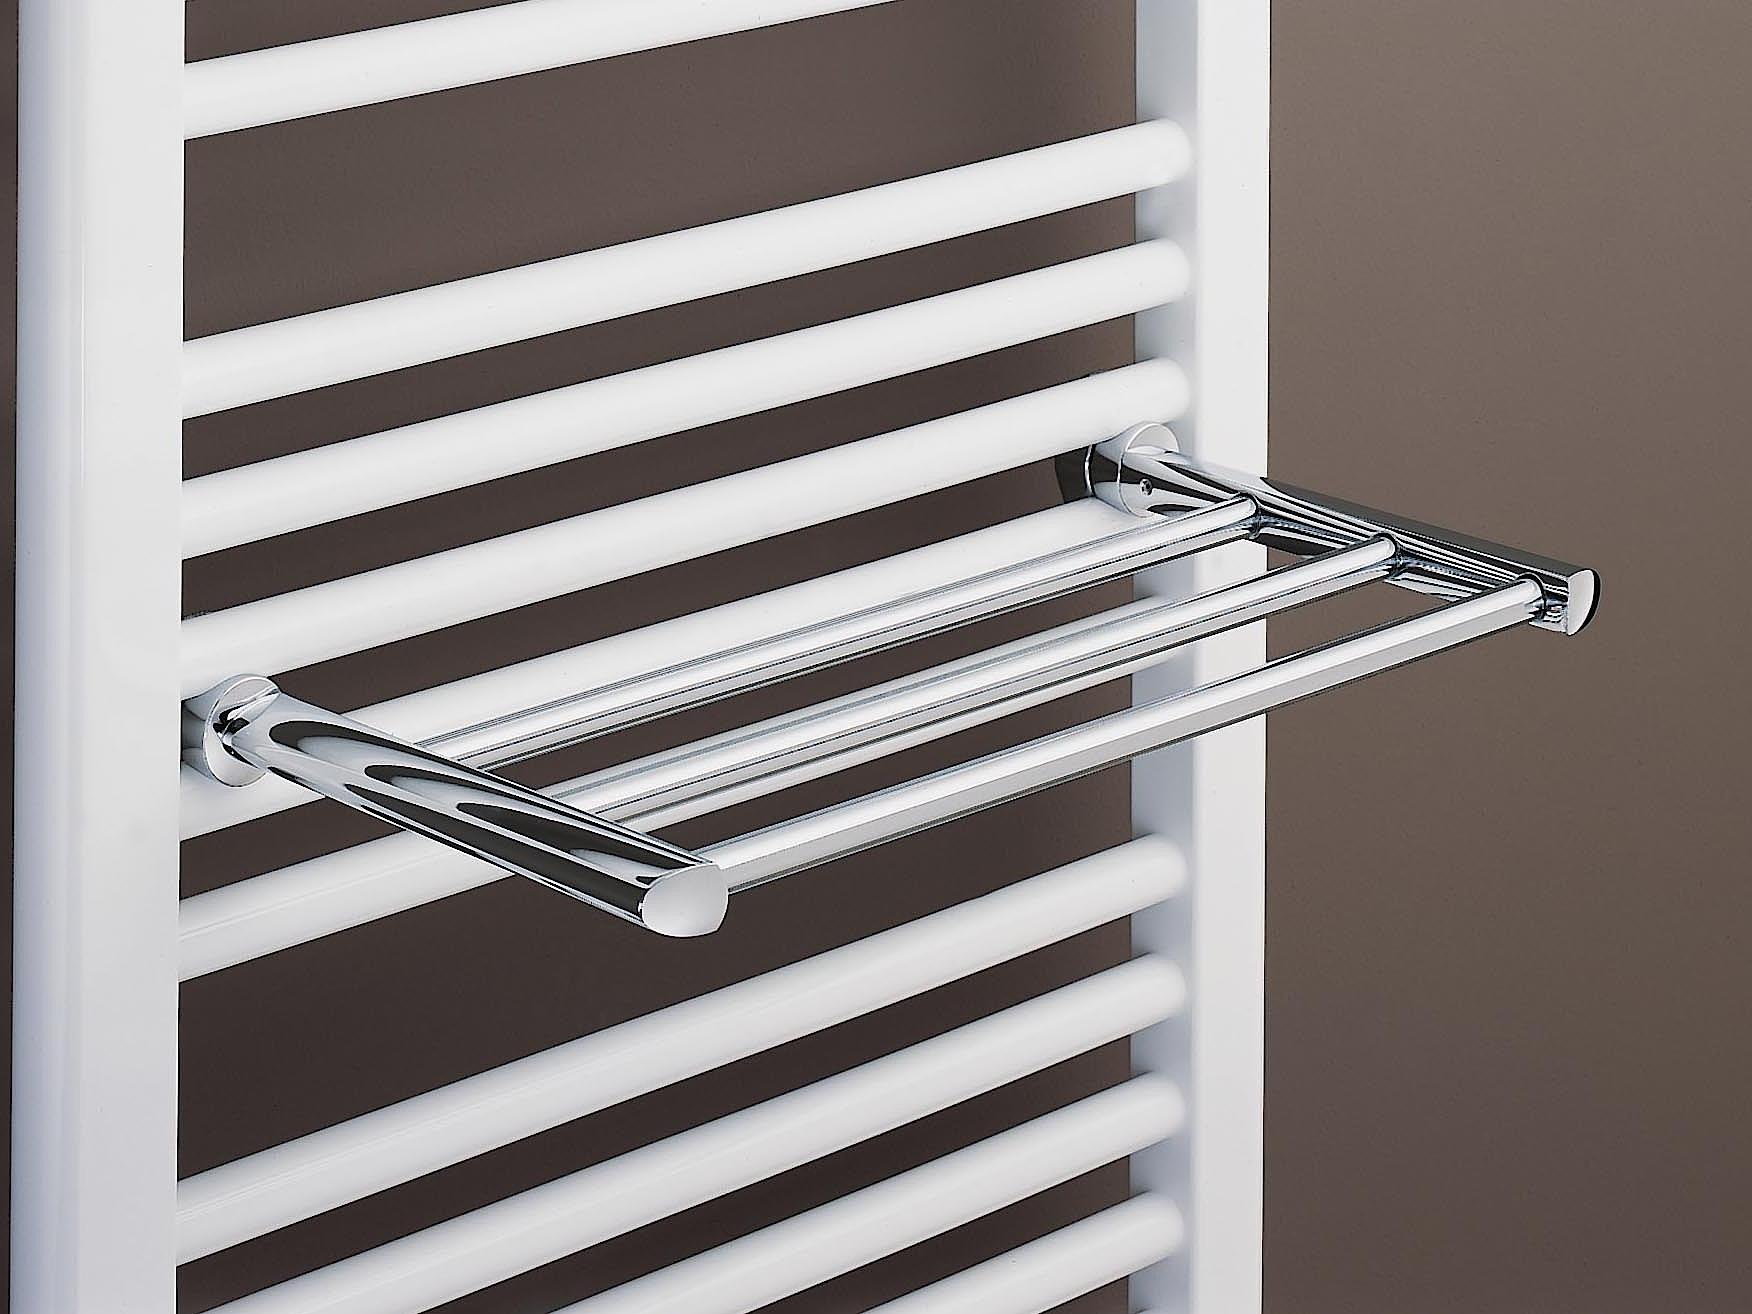 Towel shelf for Kermi Basic-50 design and bathroom radiators, painted Aluminium or Chrome-plated.